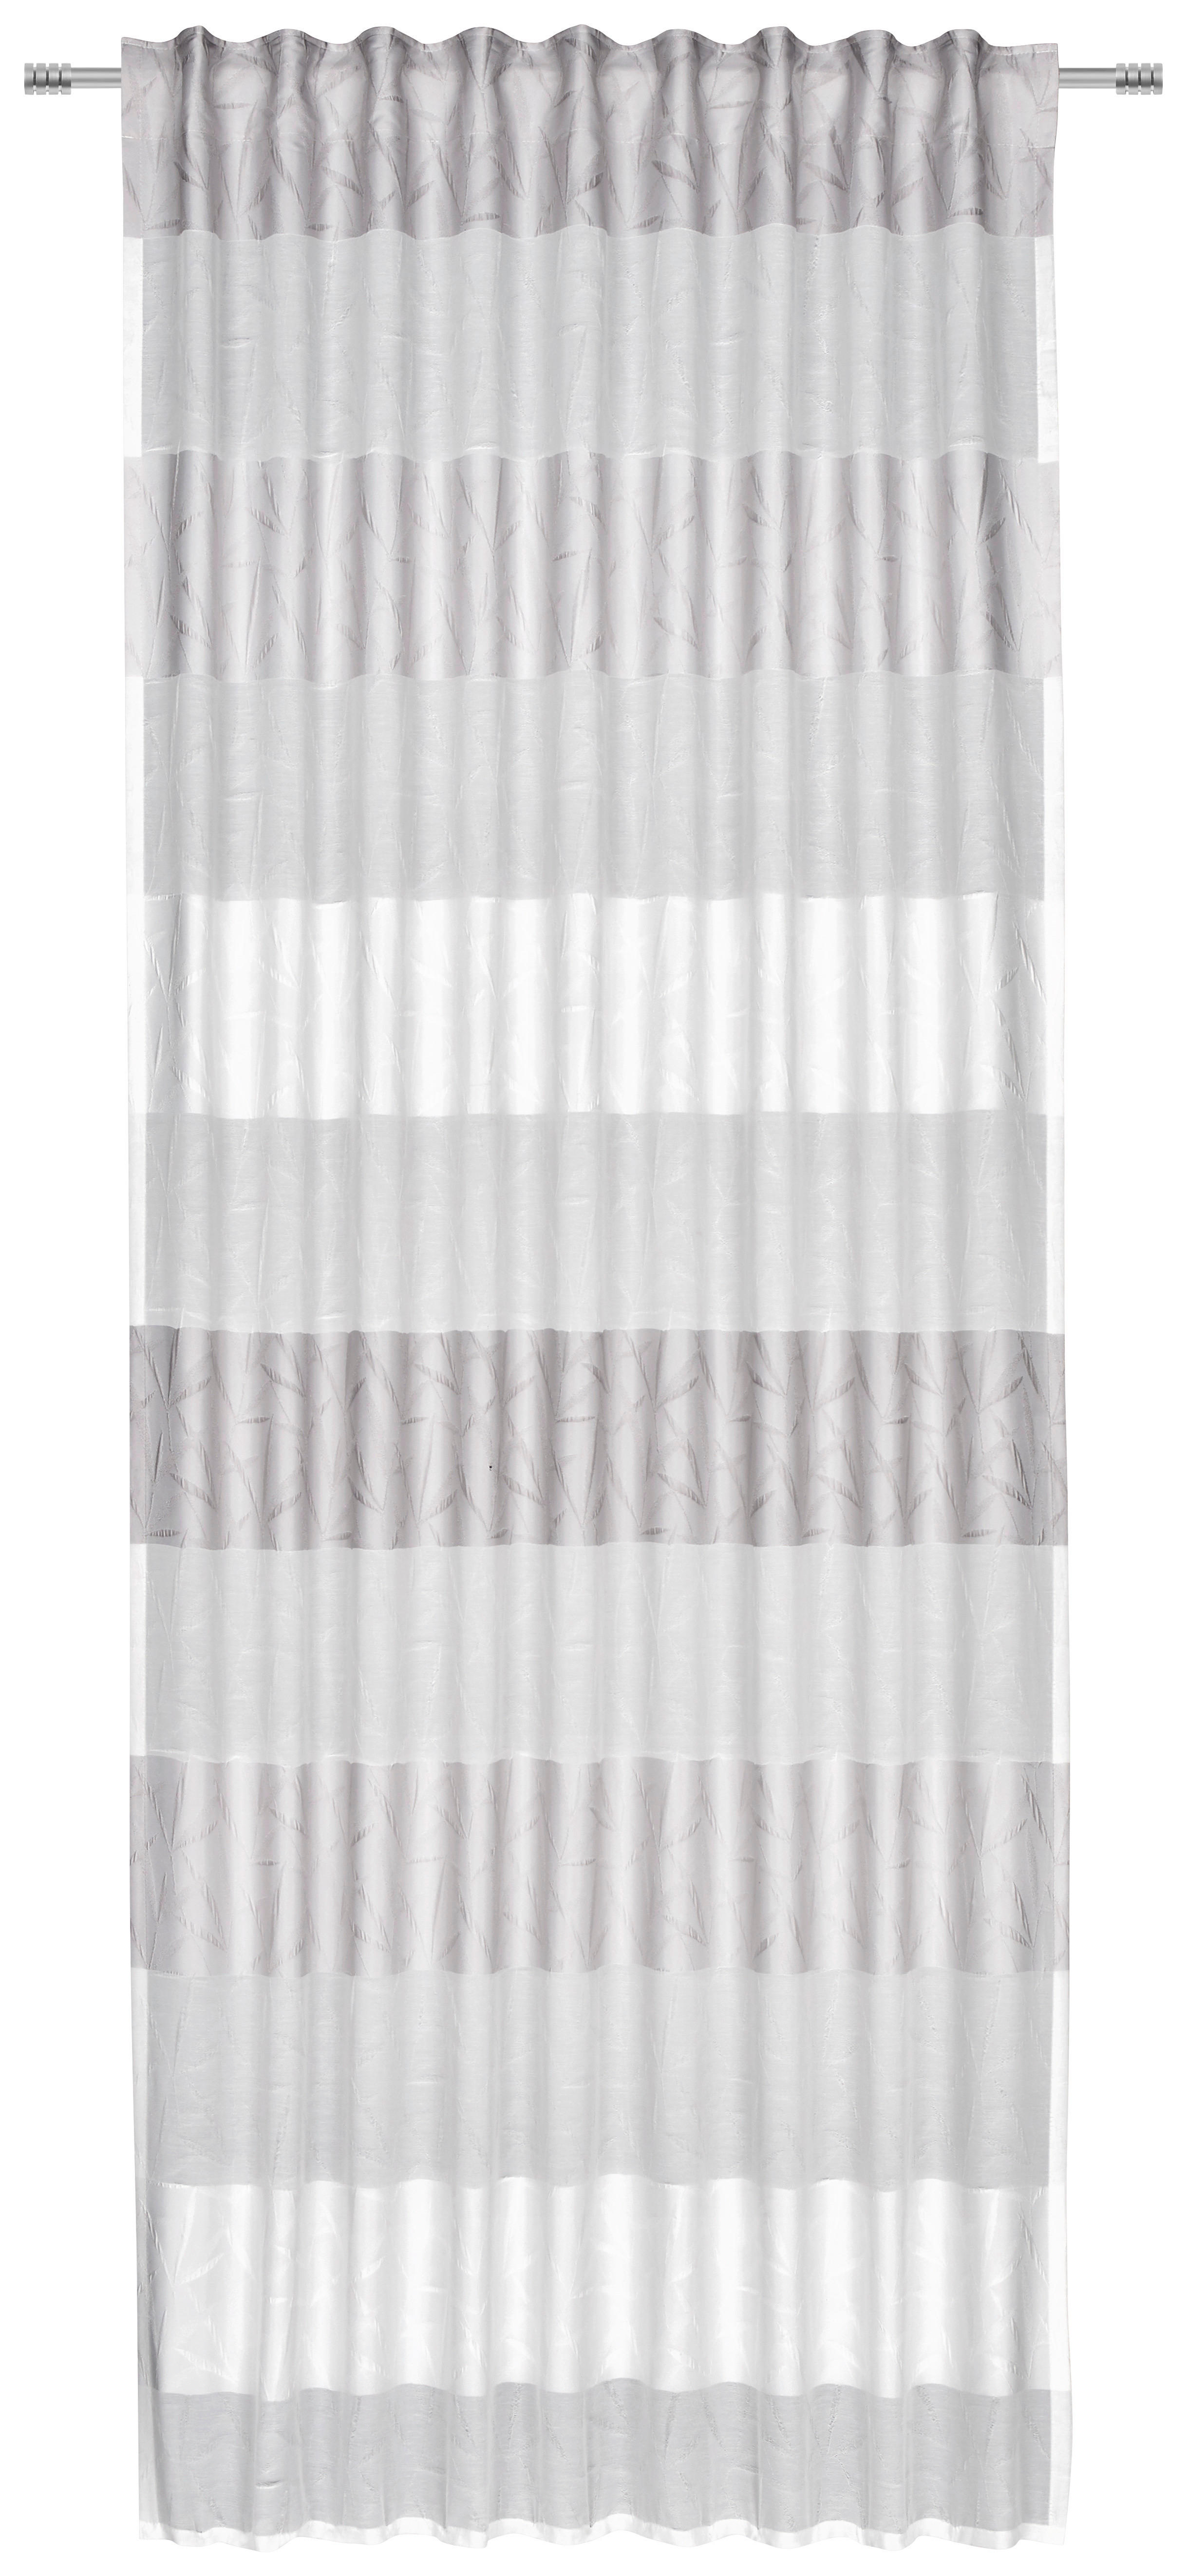 FERTIGVORHANG ALMA halbtransparent 140/245 cm   - Silberfarben, Basics, Textil (140/245cm) - Esposa